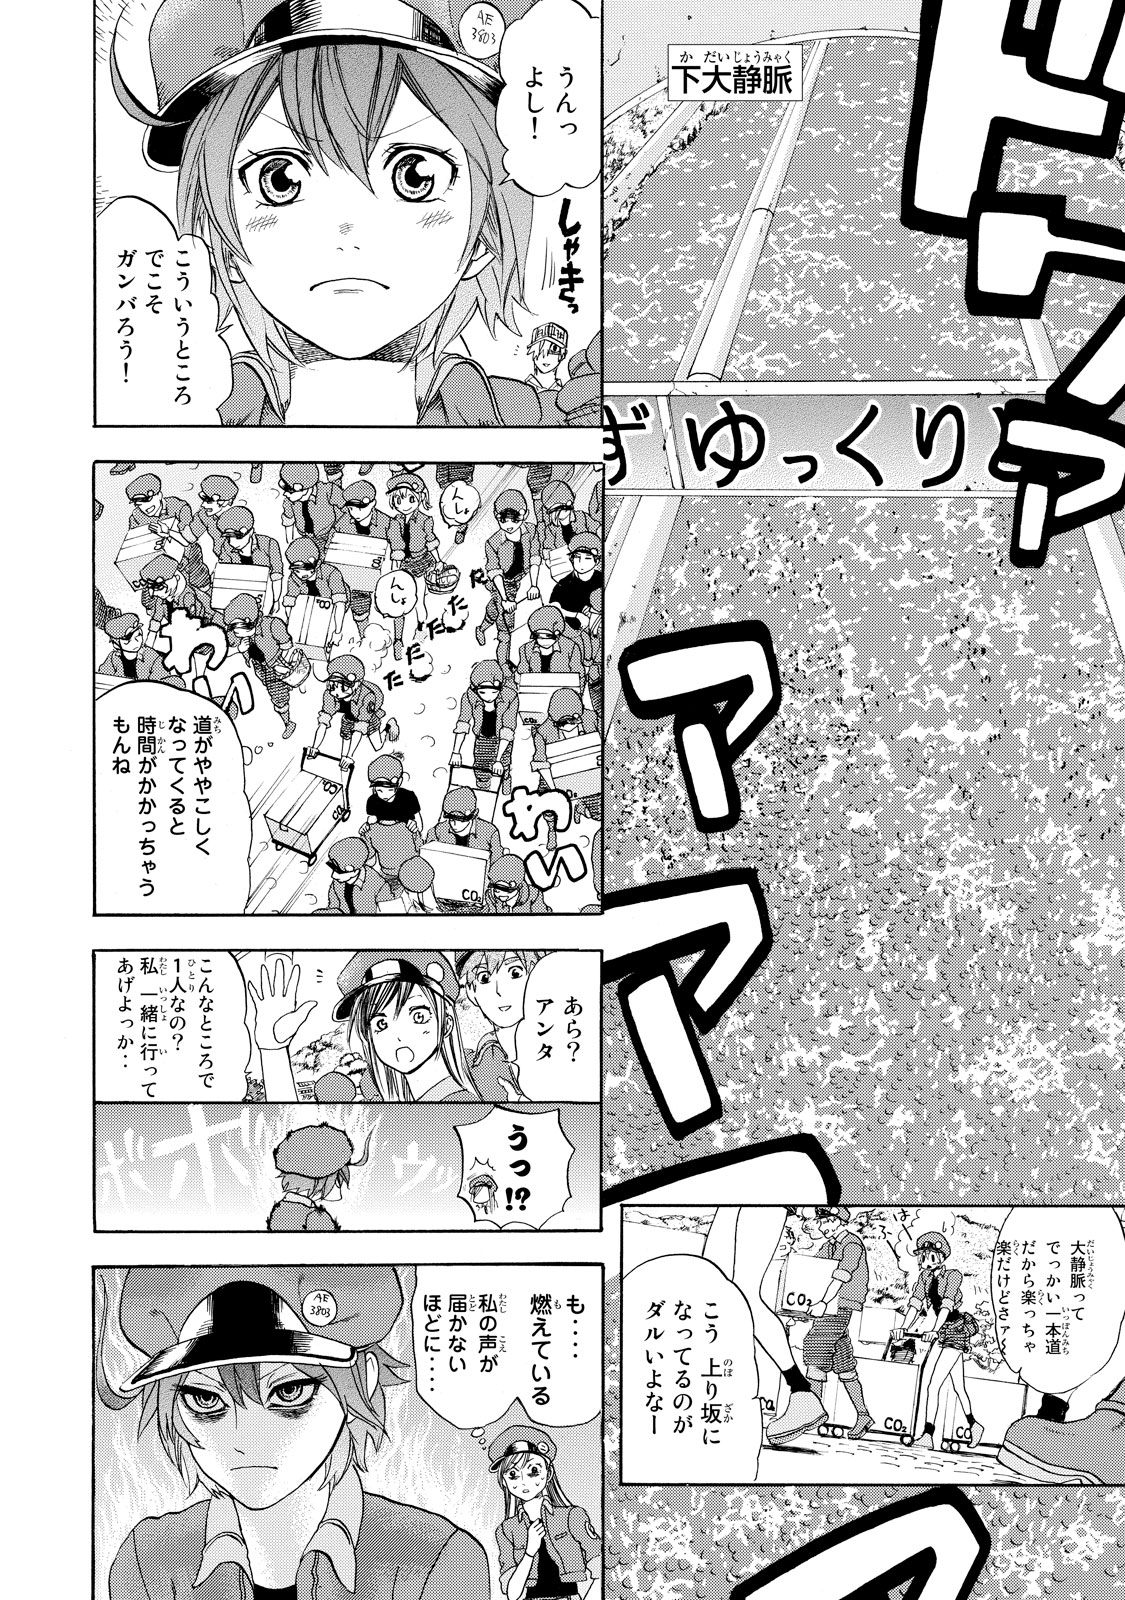 Hataraku Saibou - Chapter 10 - Page 12